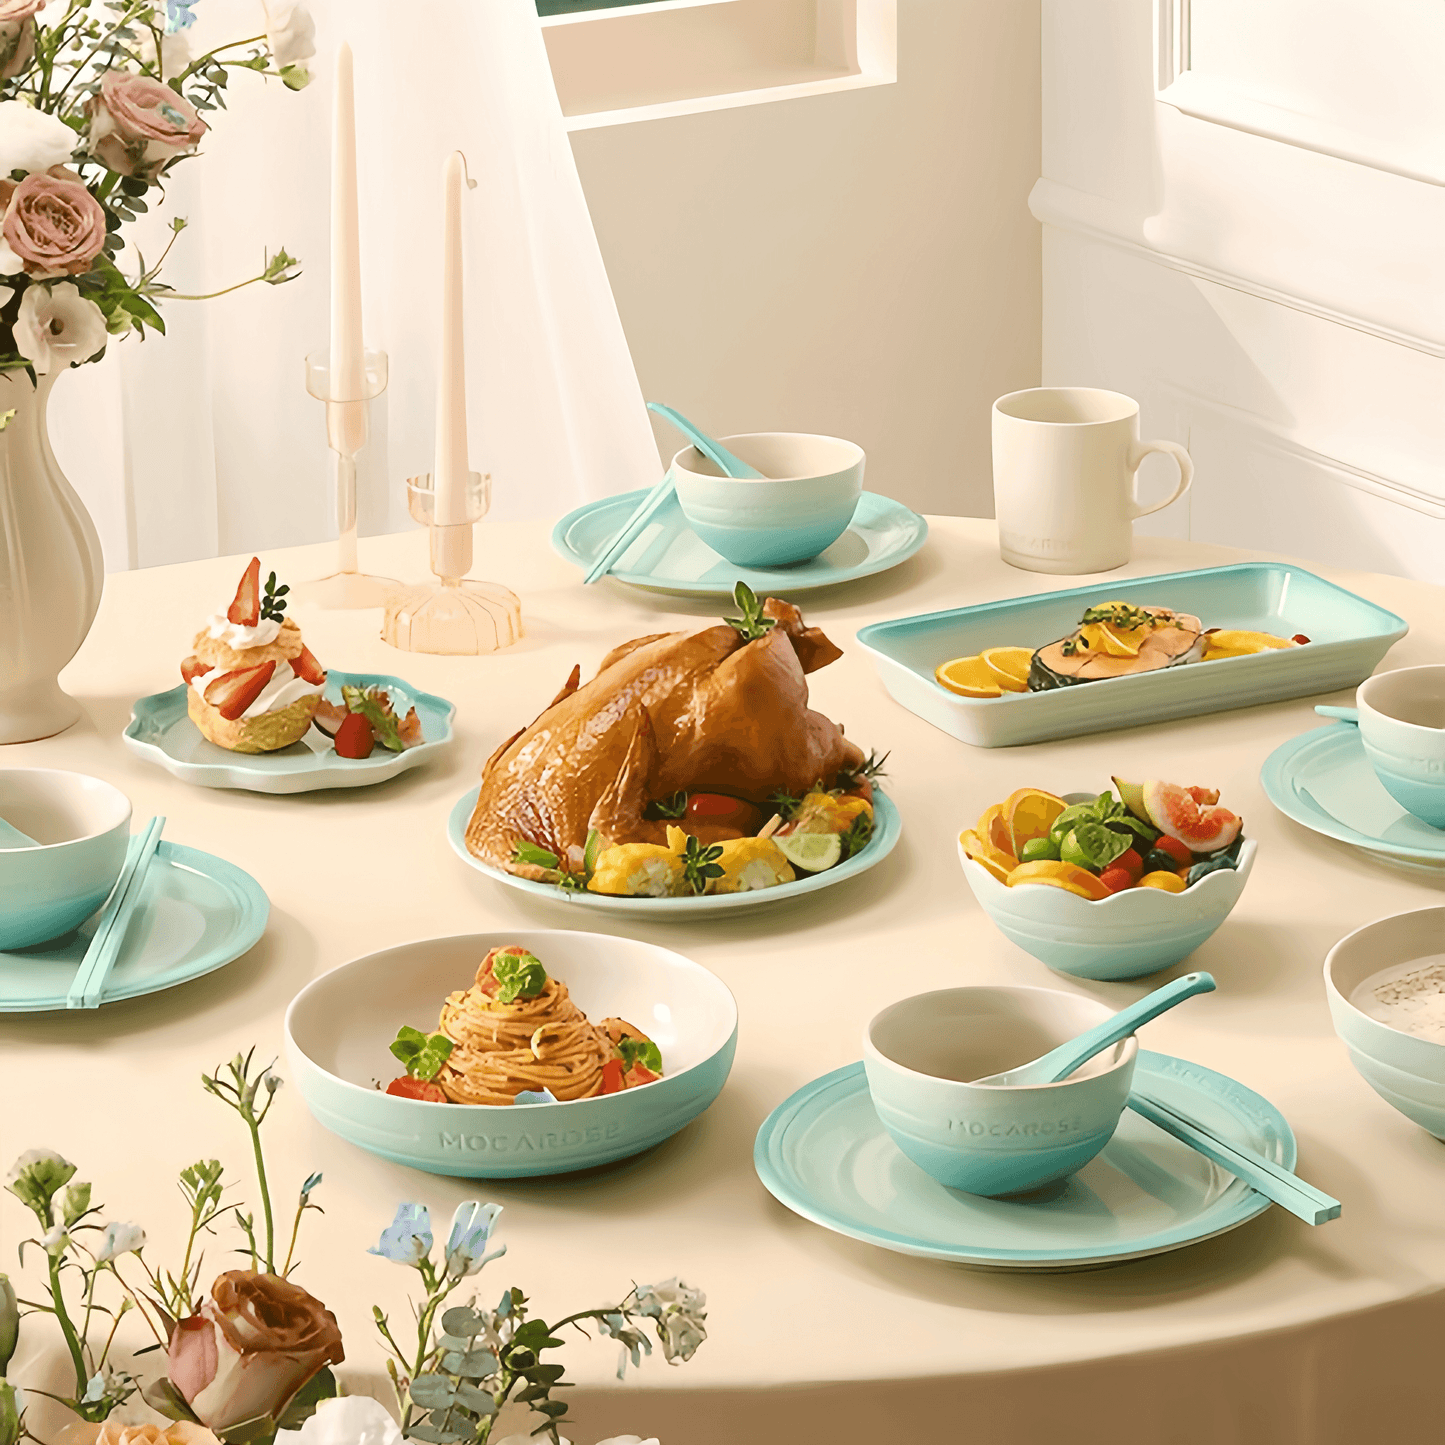 Mocarose elegant tableware set on dining table